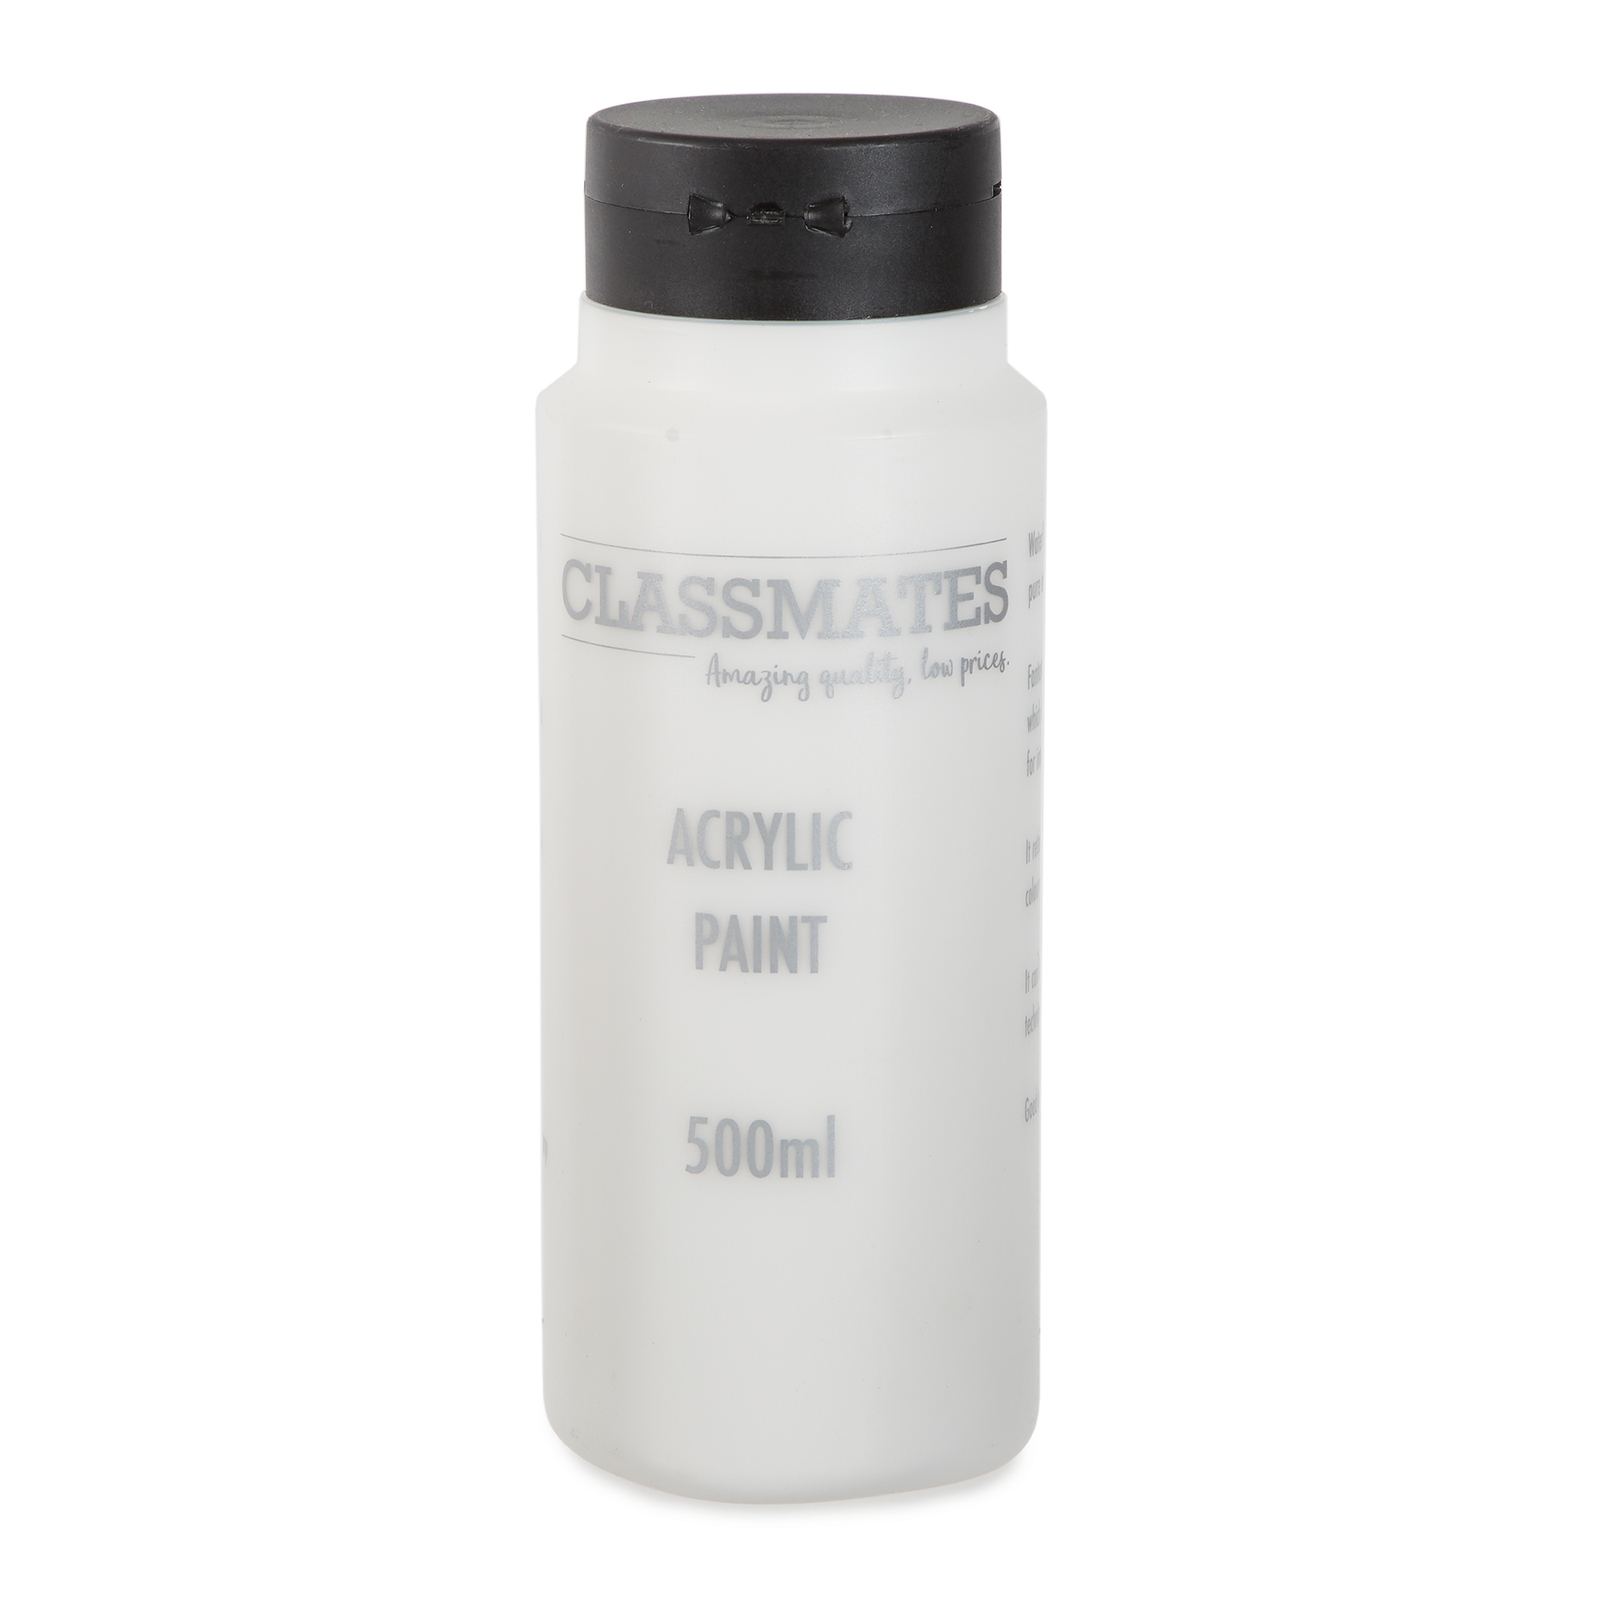 Classmates Acrylic Paint in White - 500ml Bottle